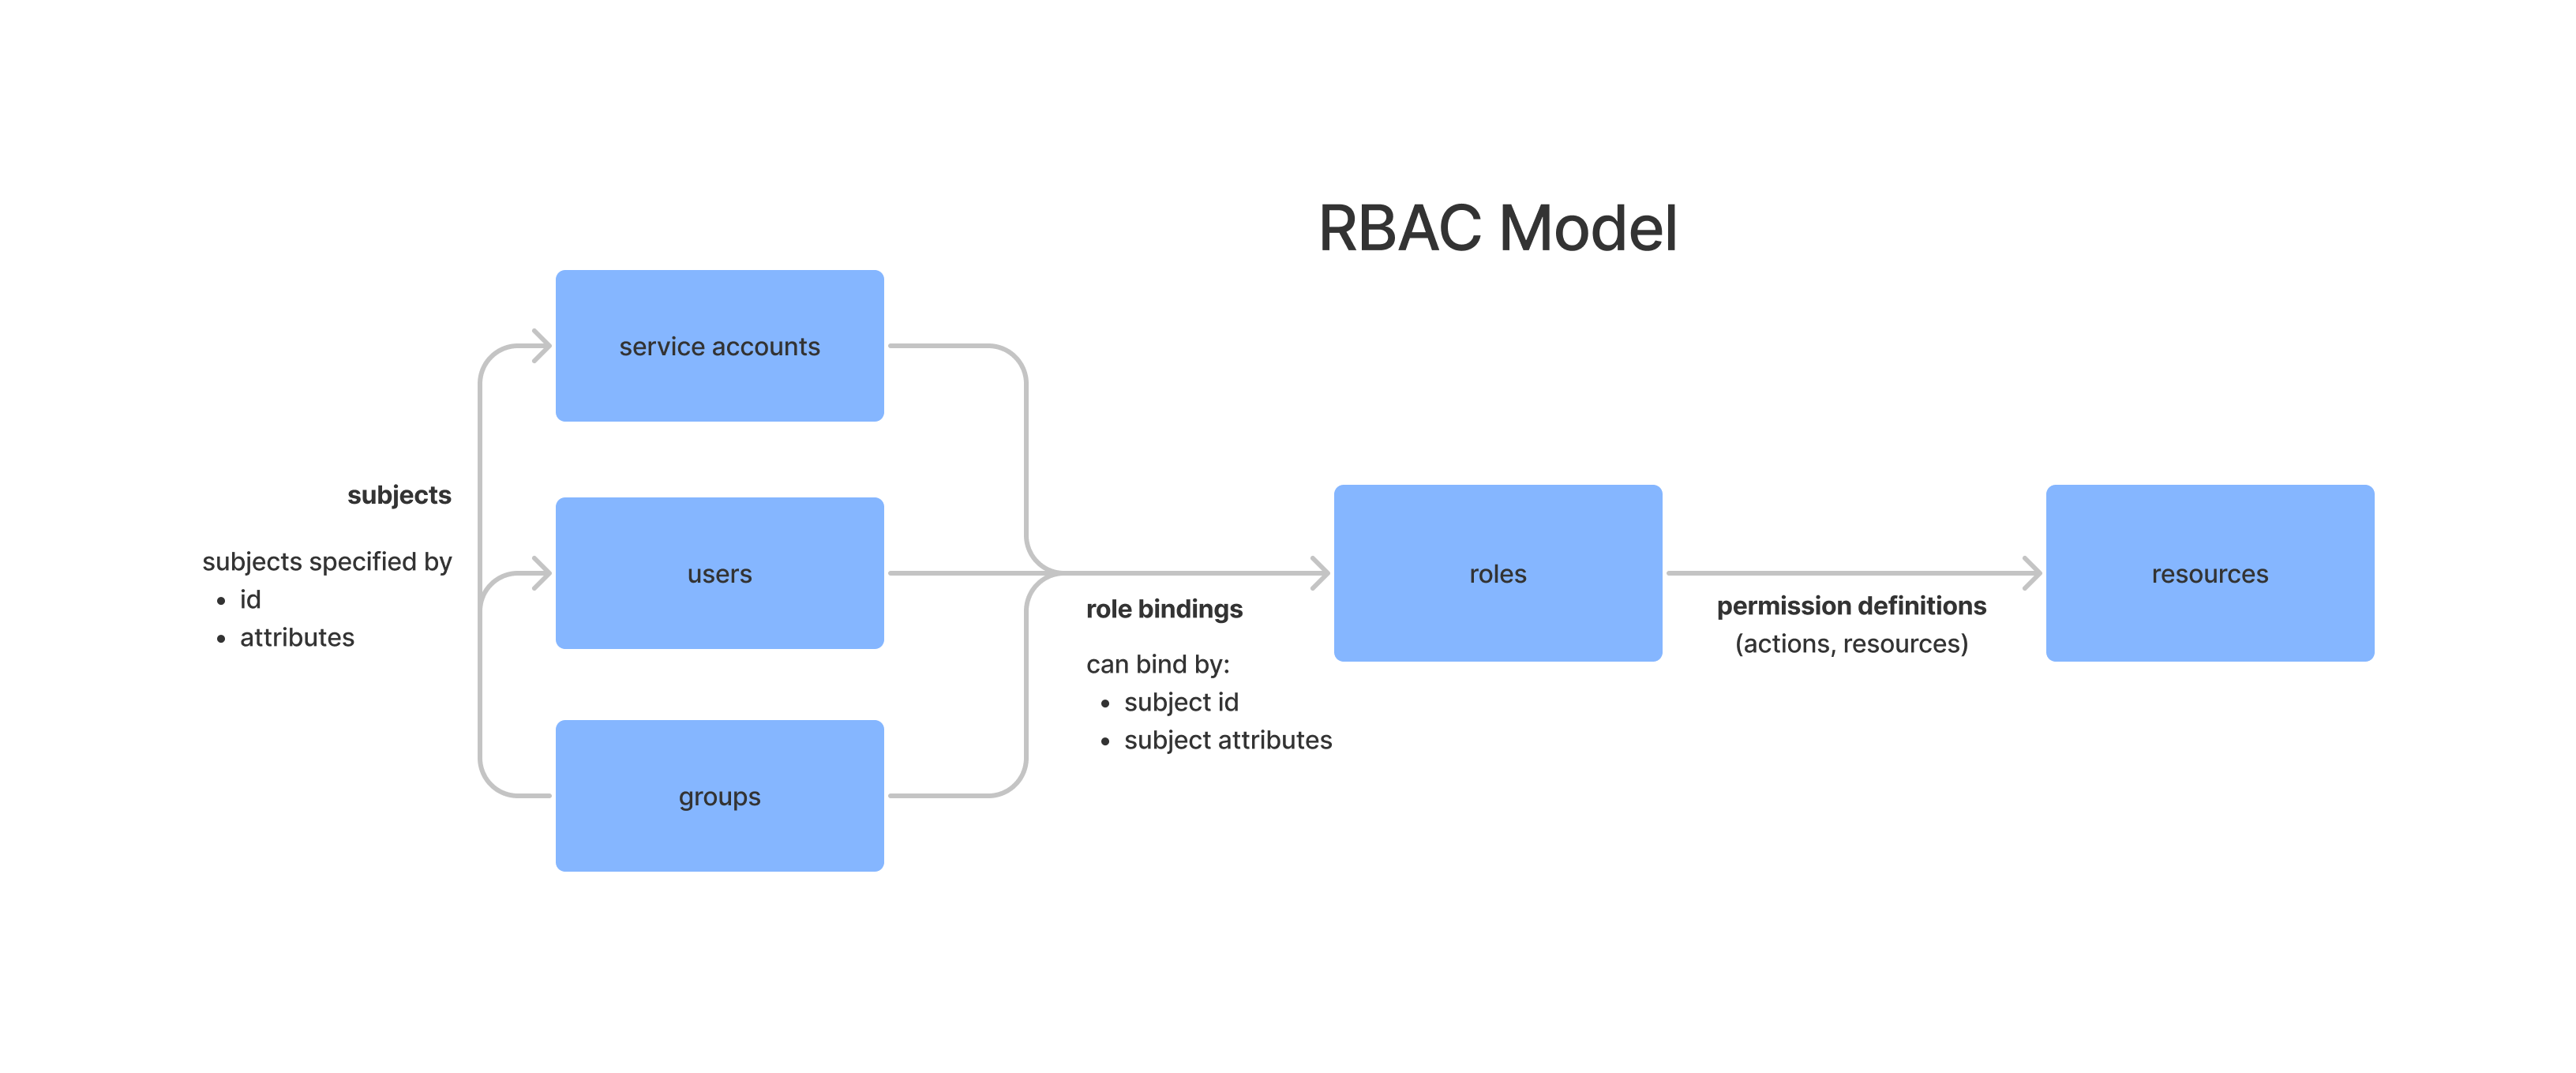 Figure 1 - RBAC Model